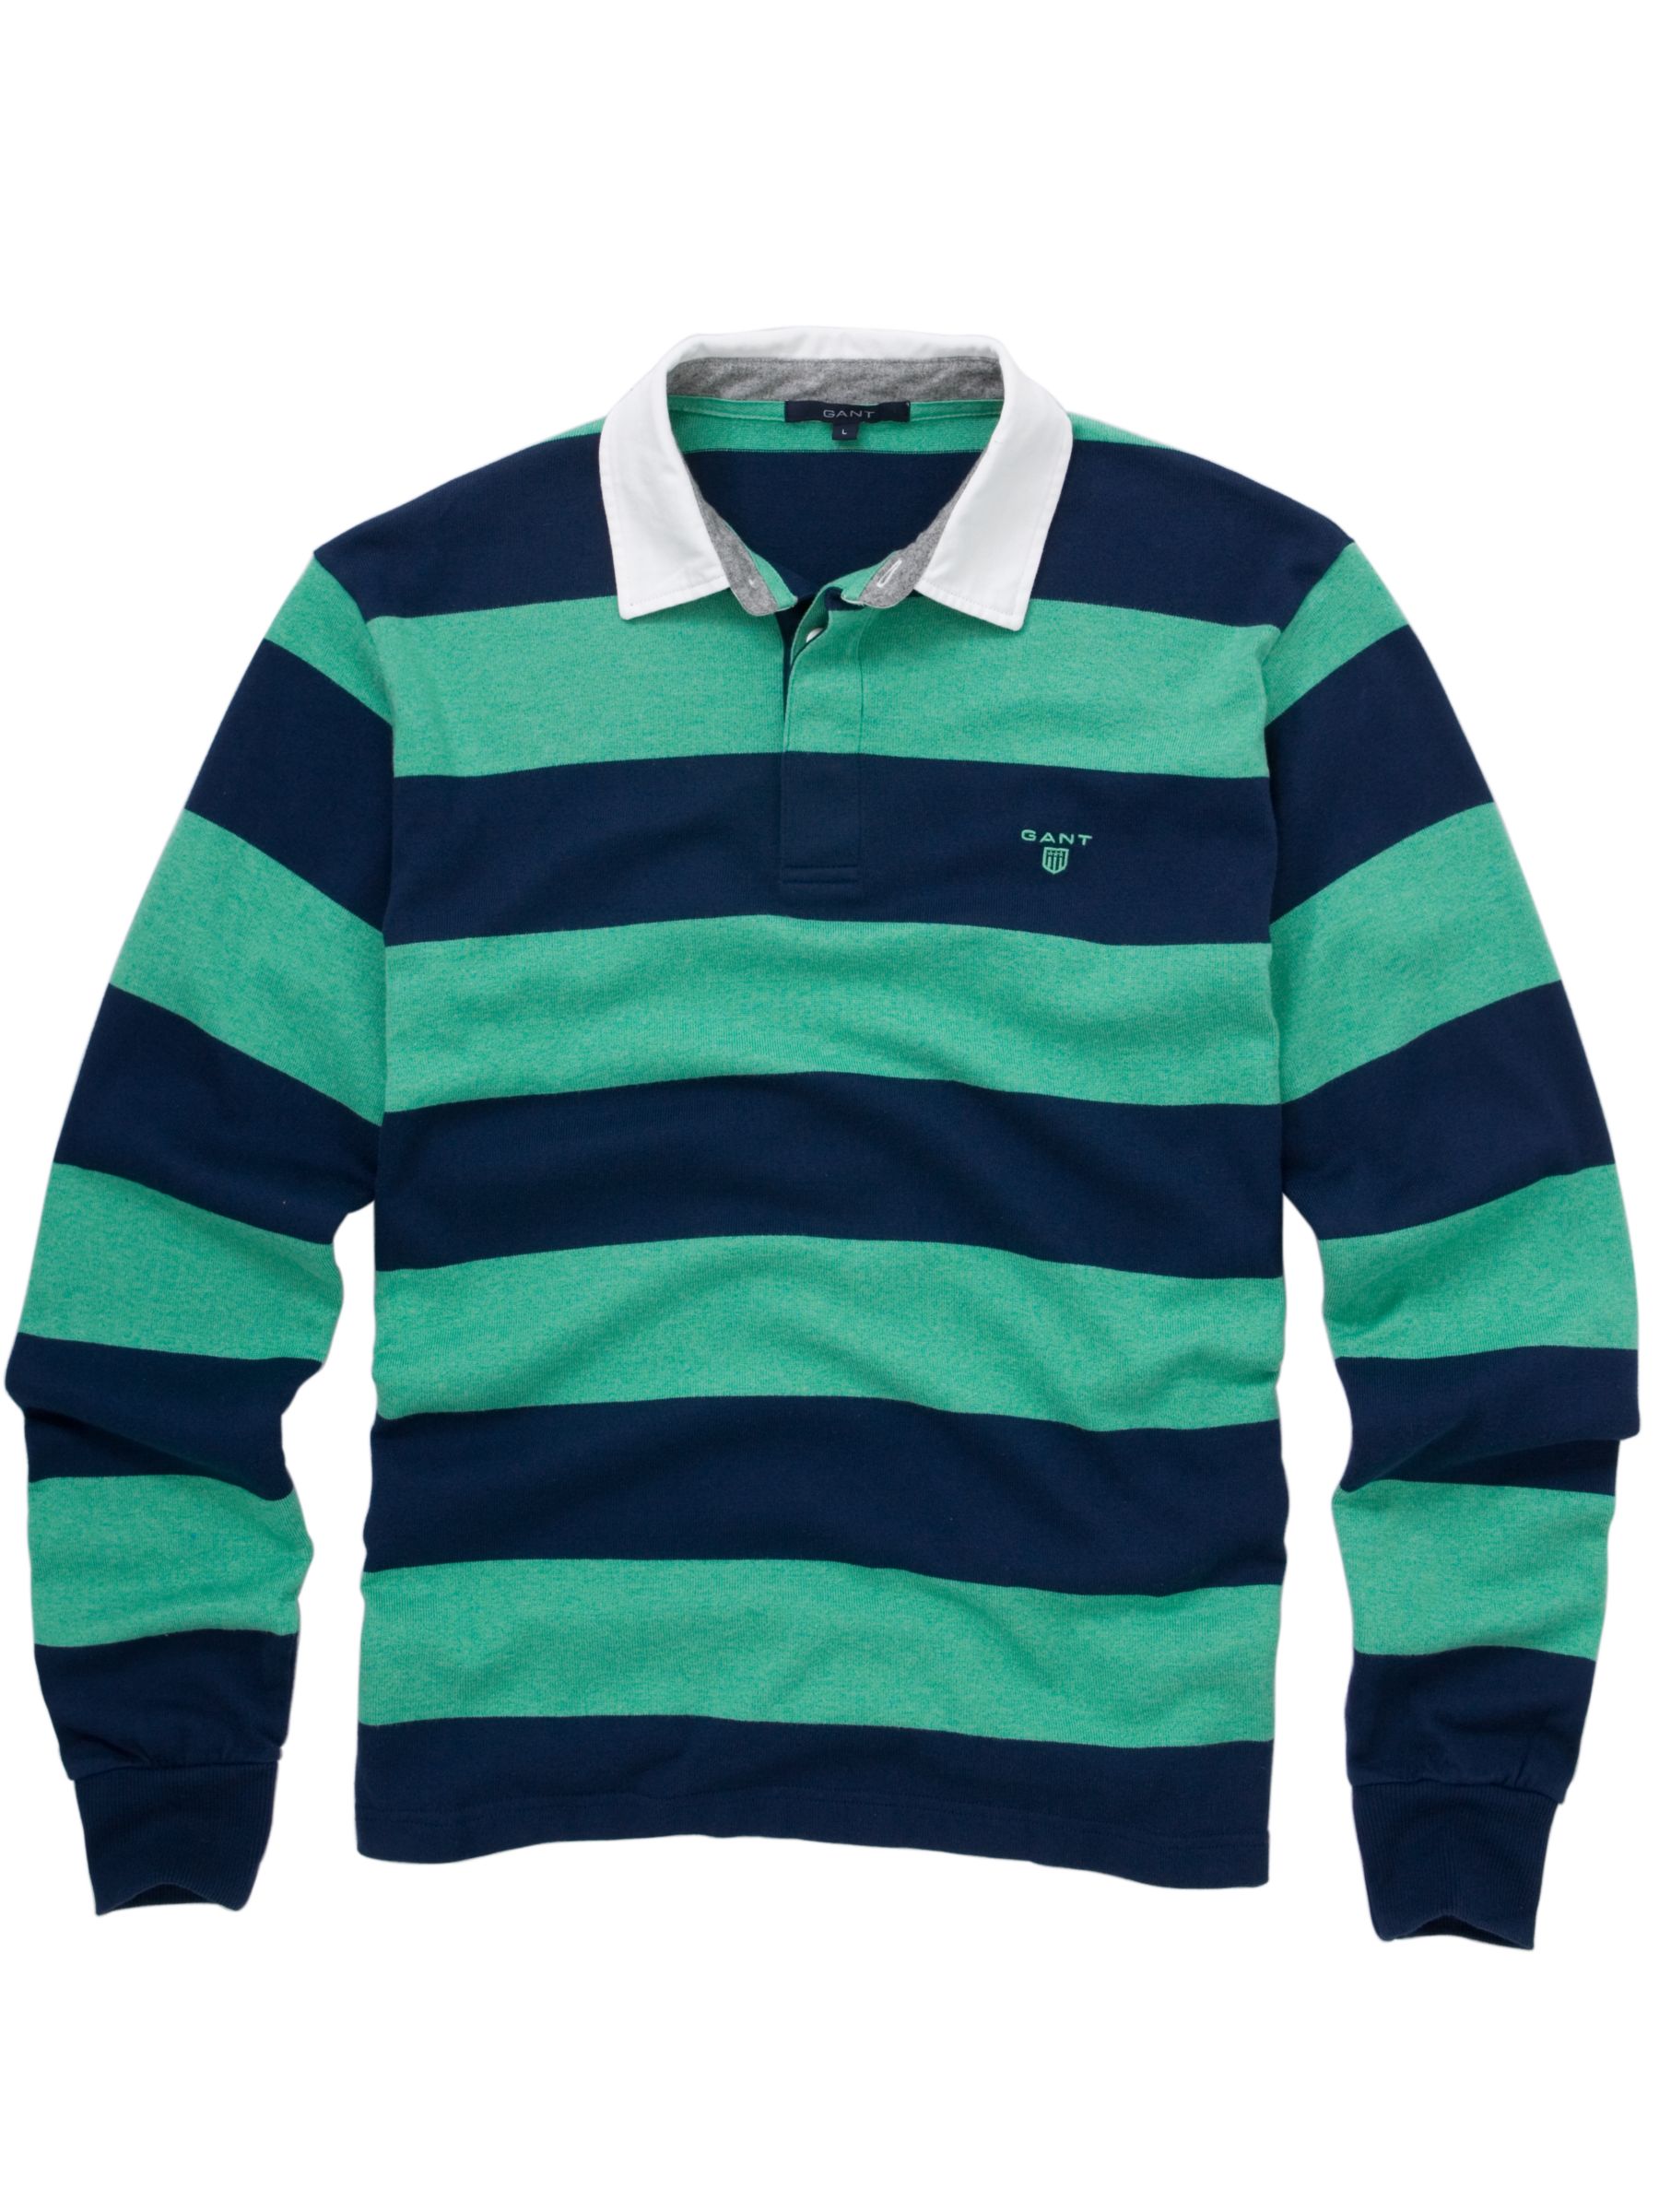 Classic Barstripe Rugby Shirt, Green/Navy